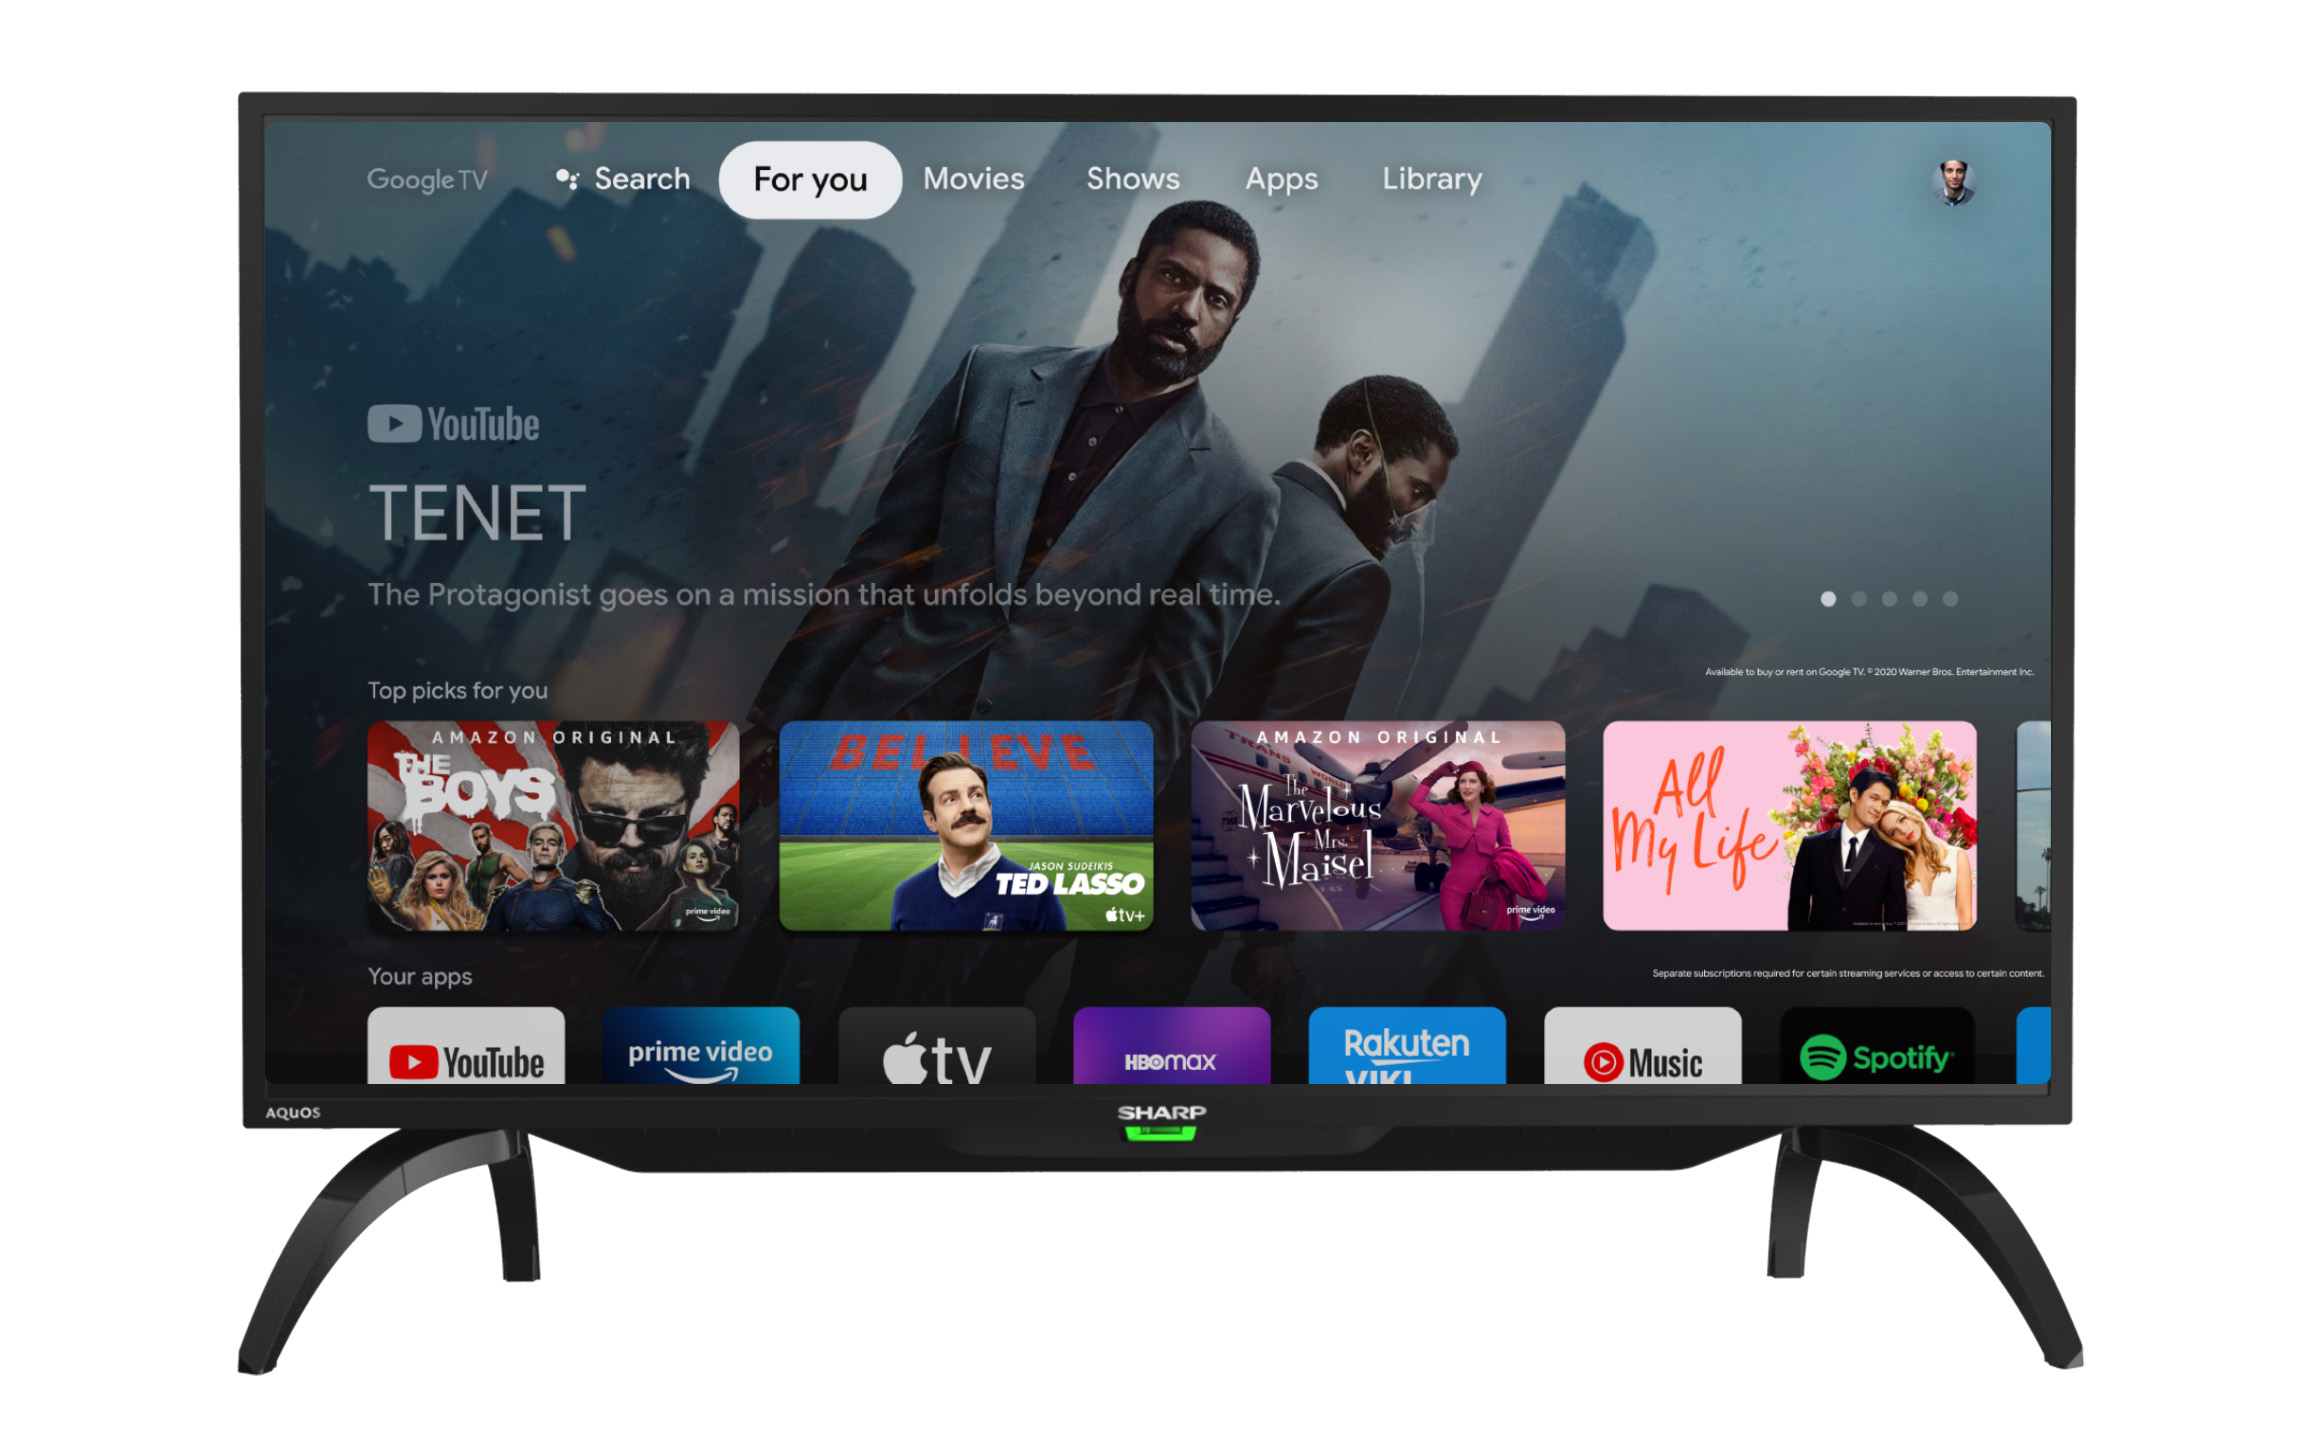 42 Inch Full-HD Google TV with Google Assistant 2T-C42EG1i